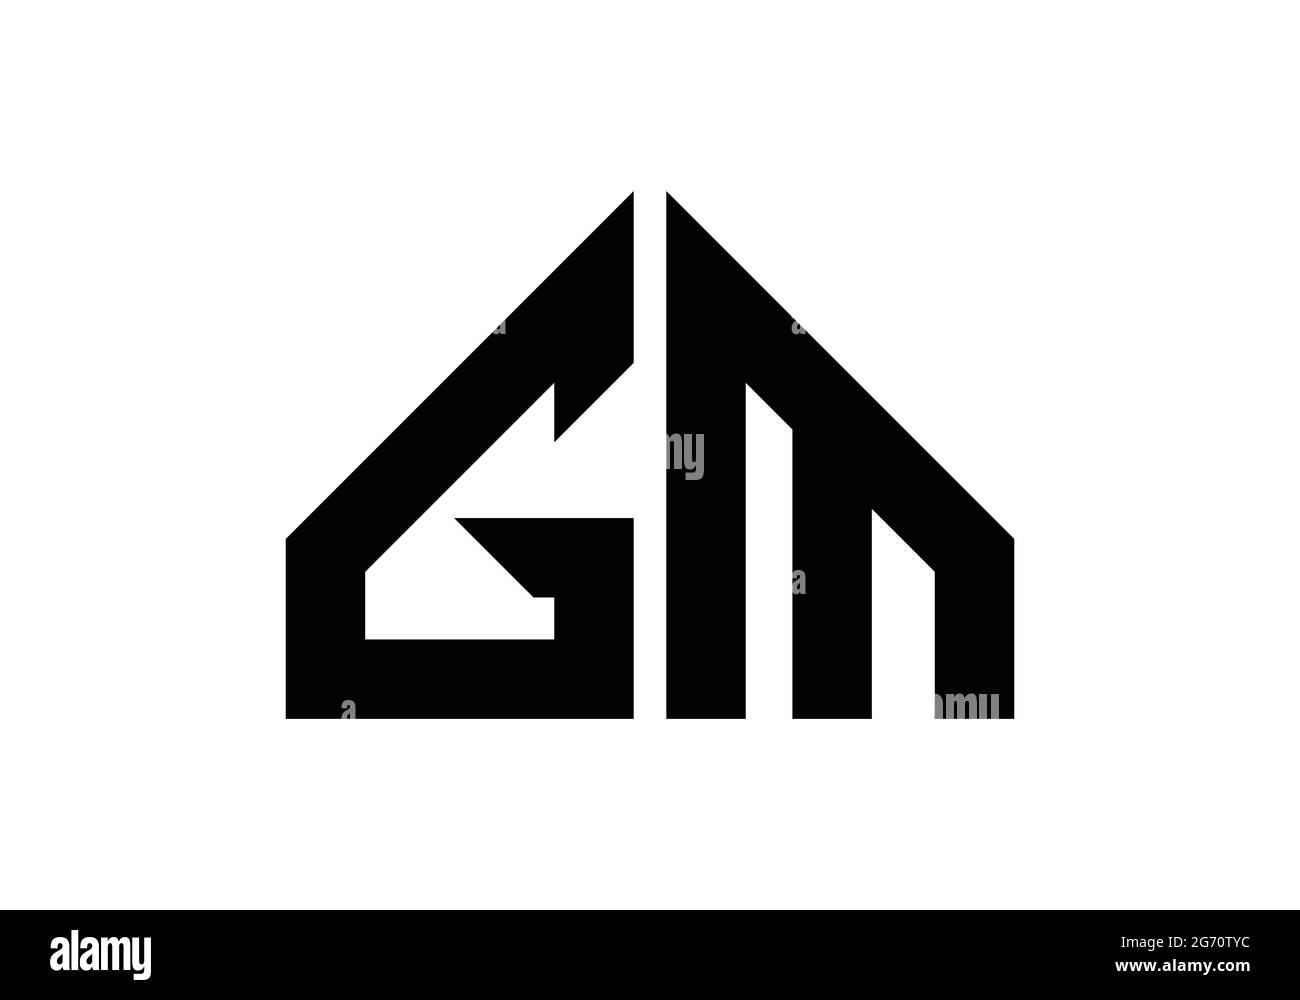 Initial Letter GM Logo Template Design 5301554 Vector Art at Vecteezy